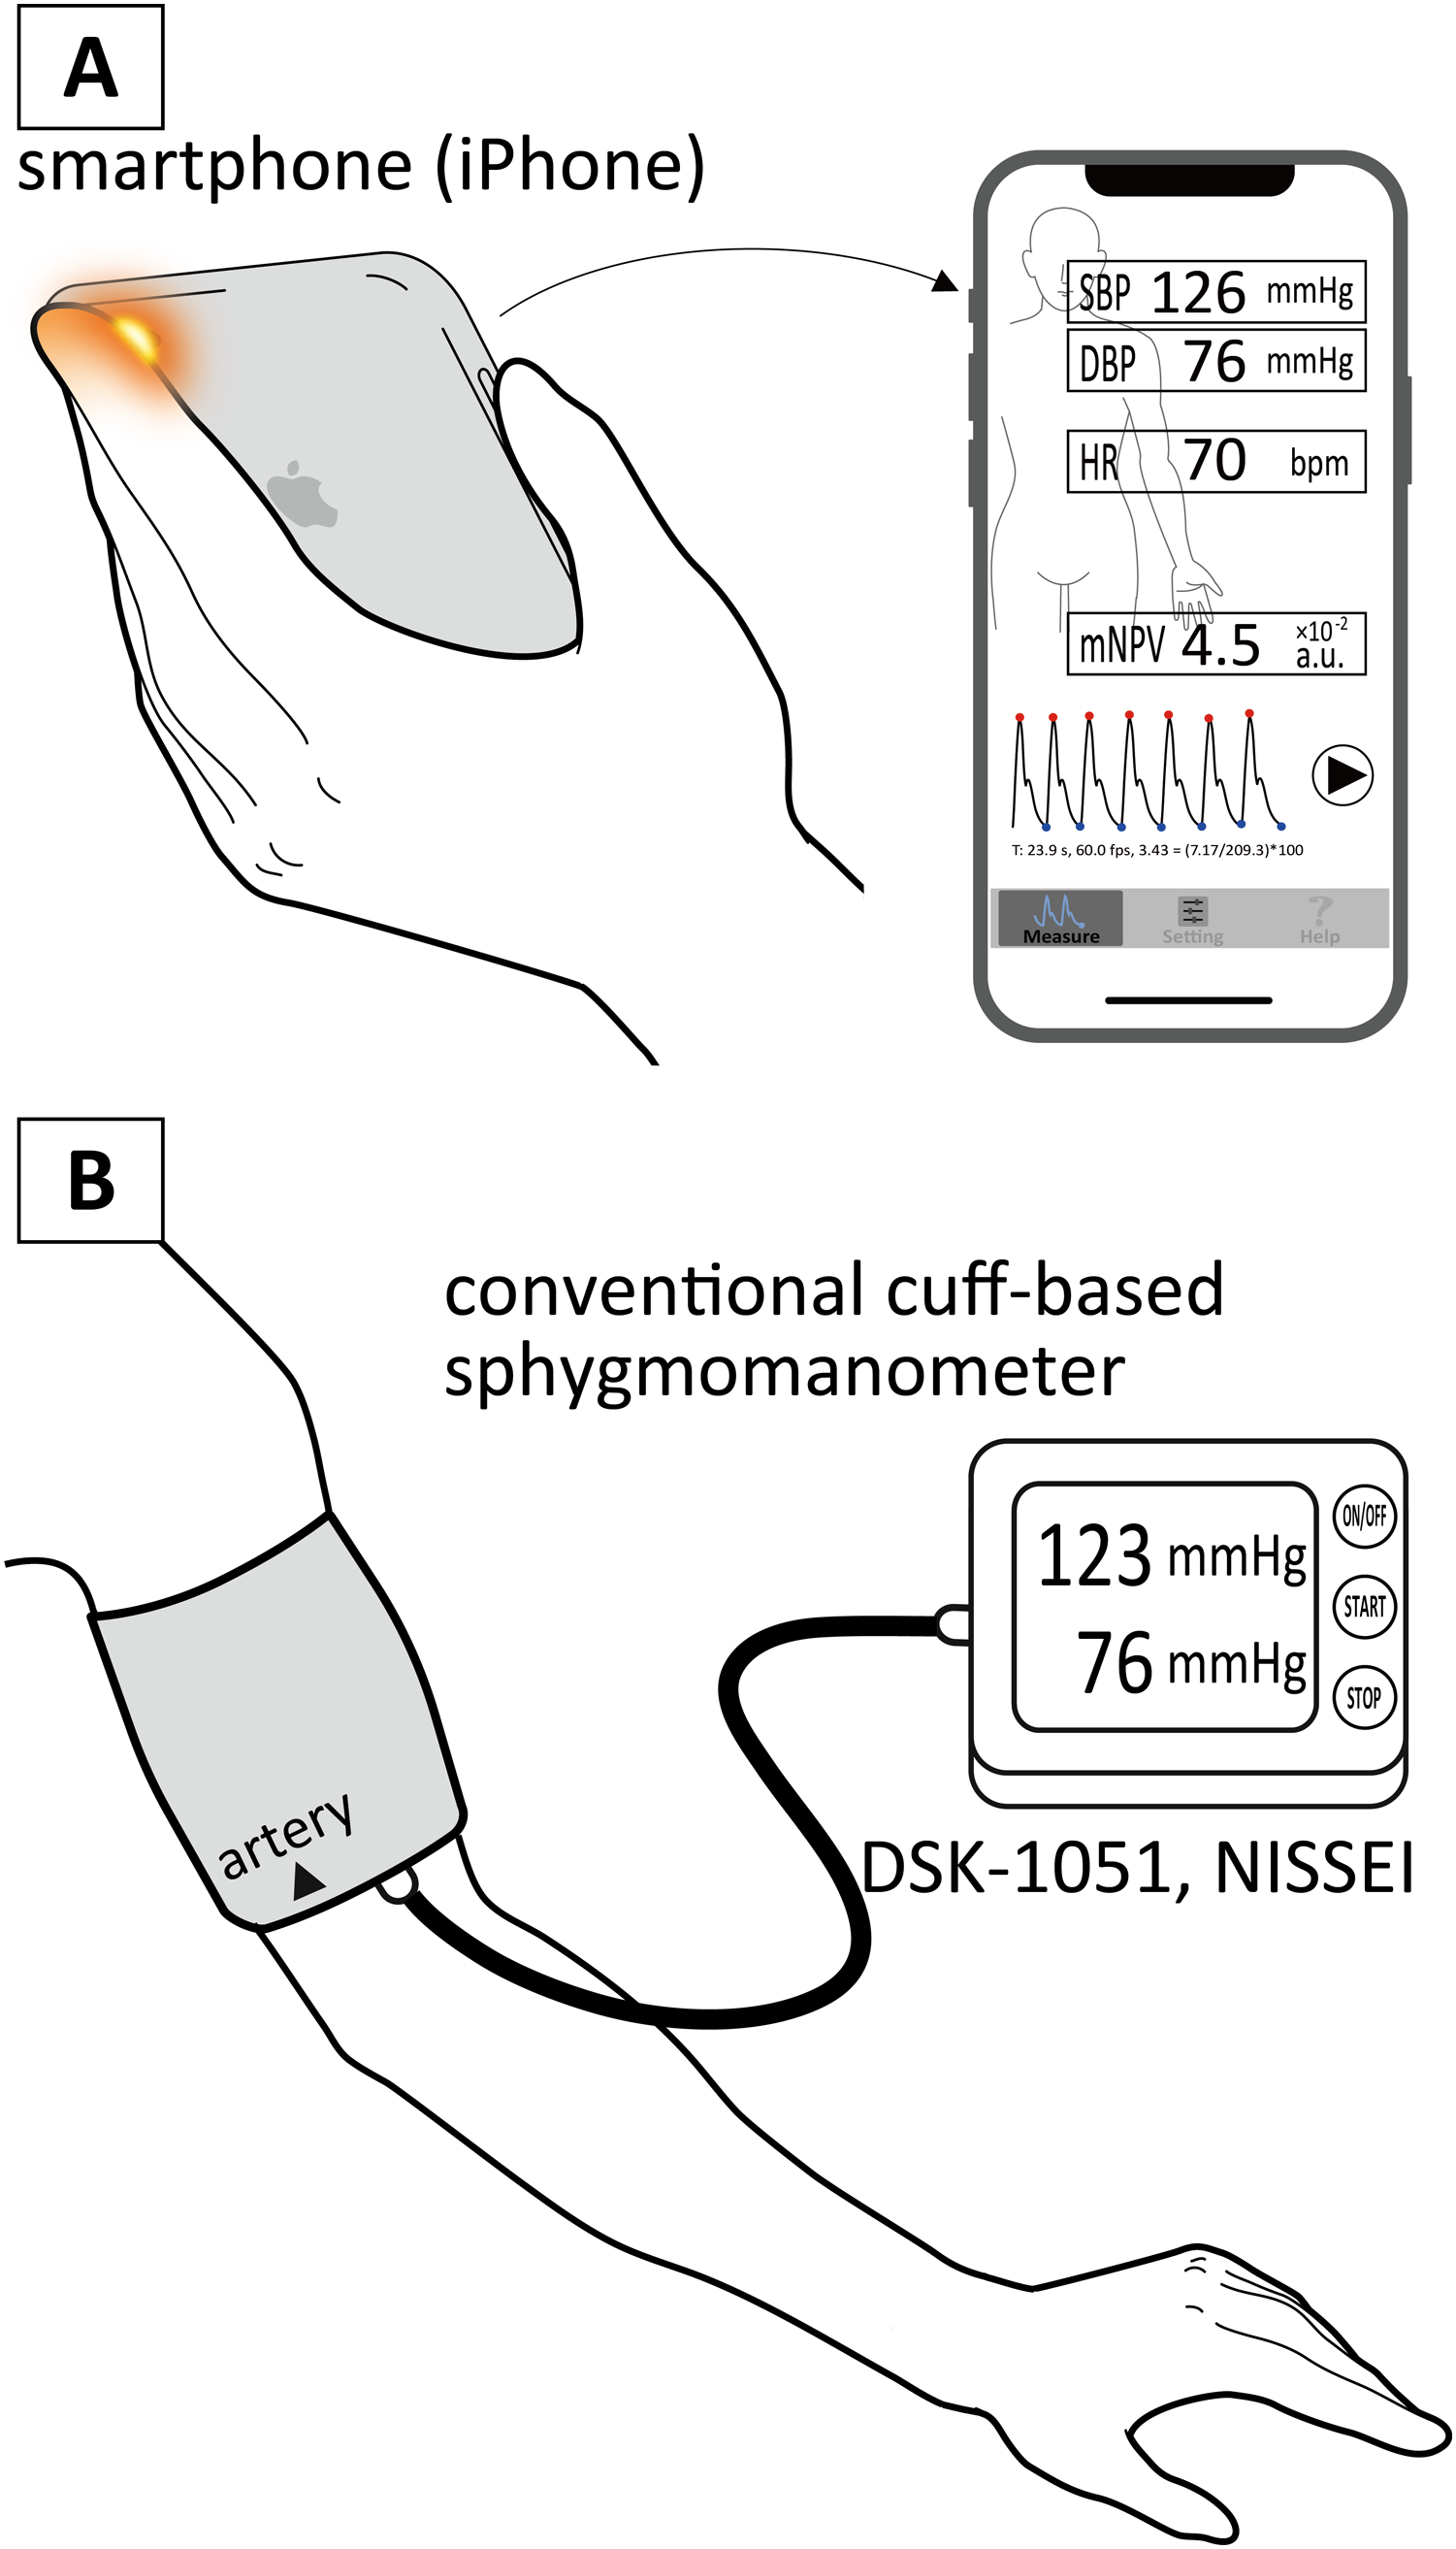 Smartphone-based blood pressure monitoring via the oscillometric  finger-pressing method